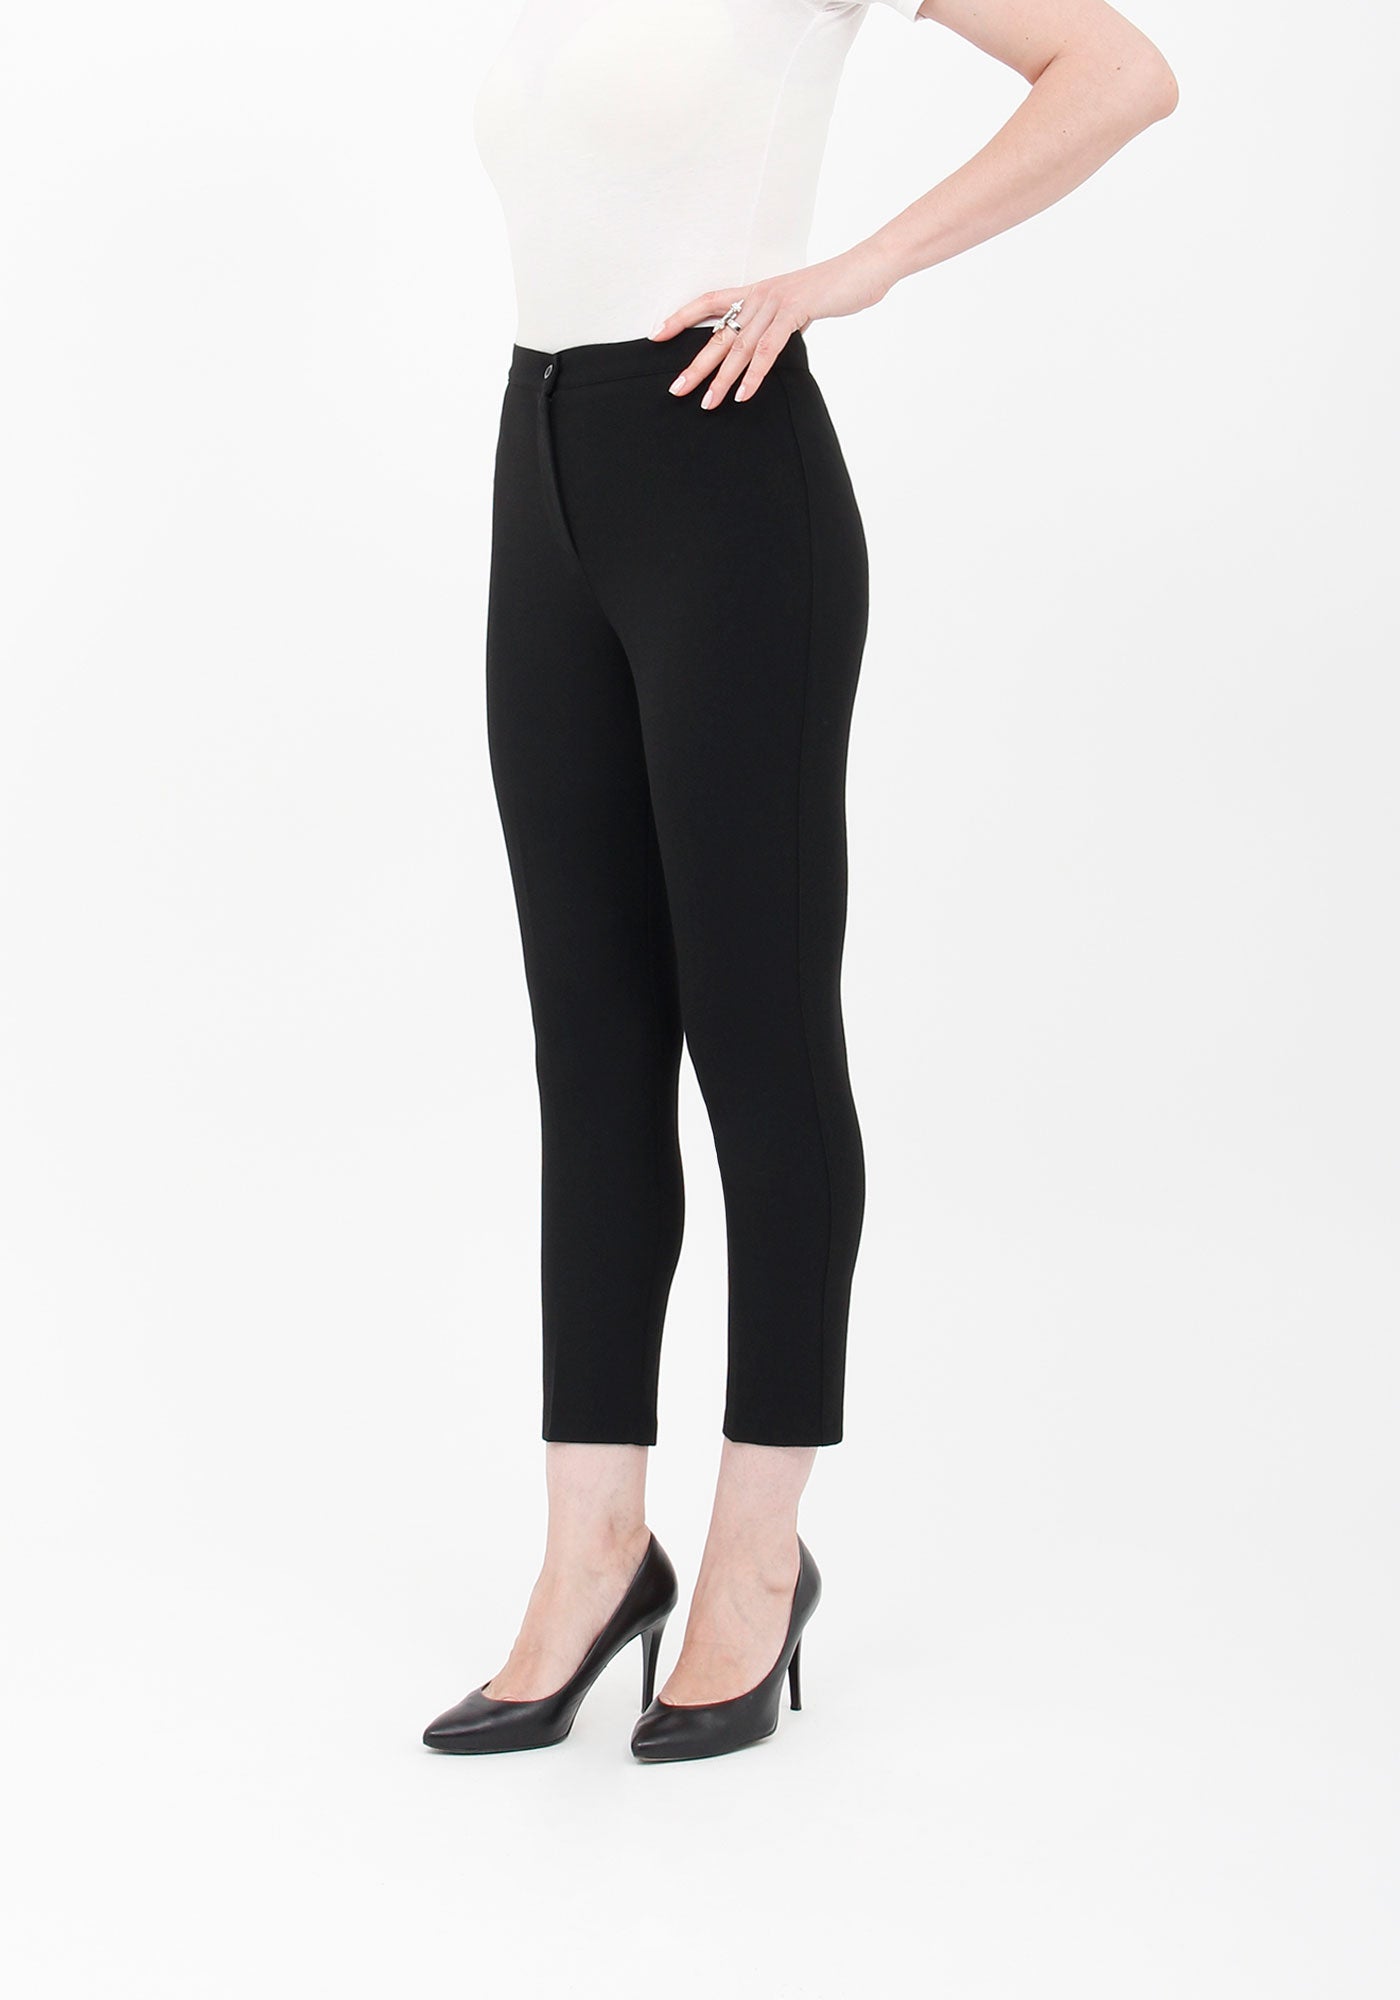 G-Line Women's Black High Waist Slim Fit Stretchy Skinny Work Pants